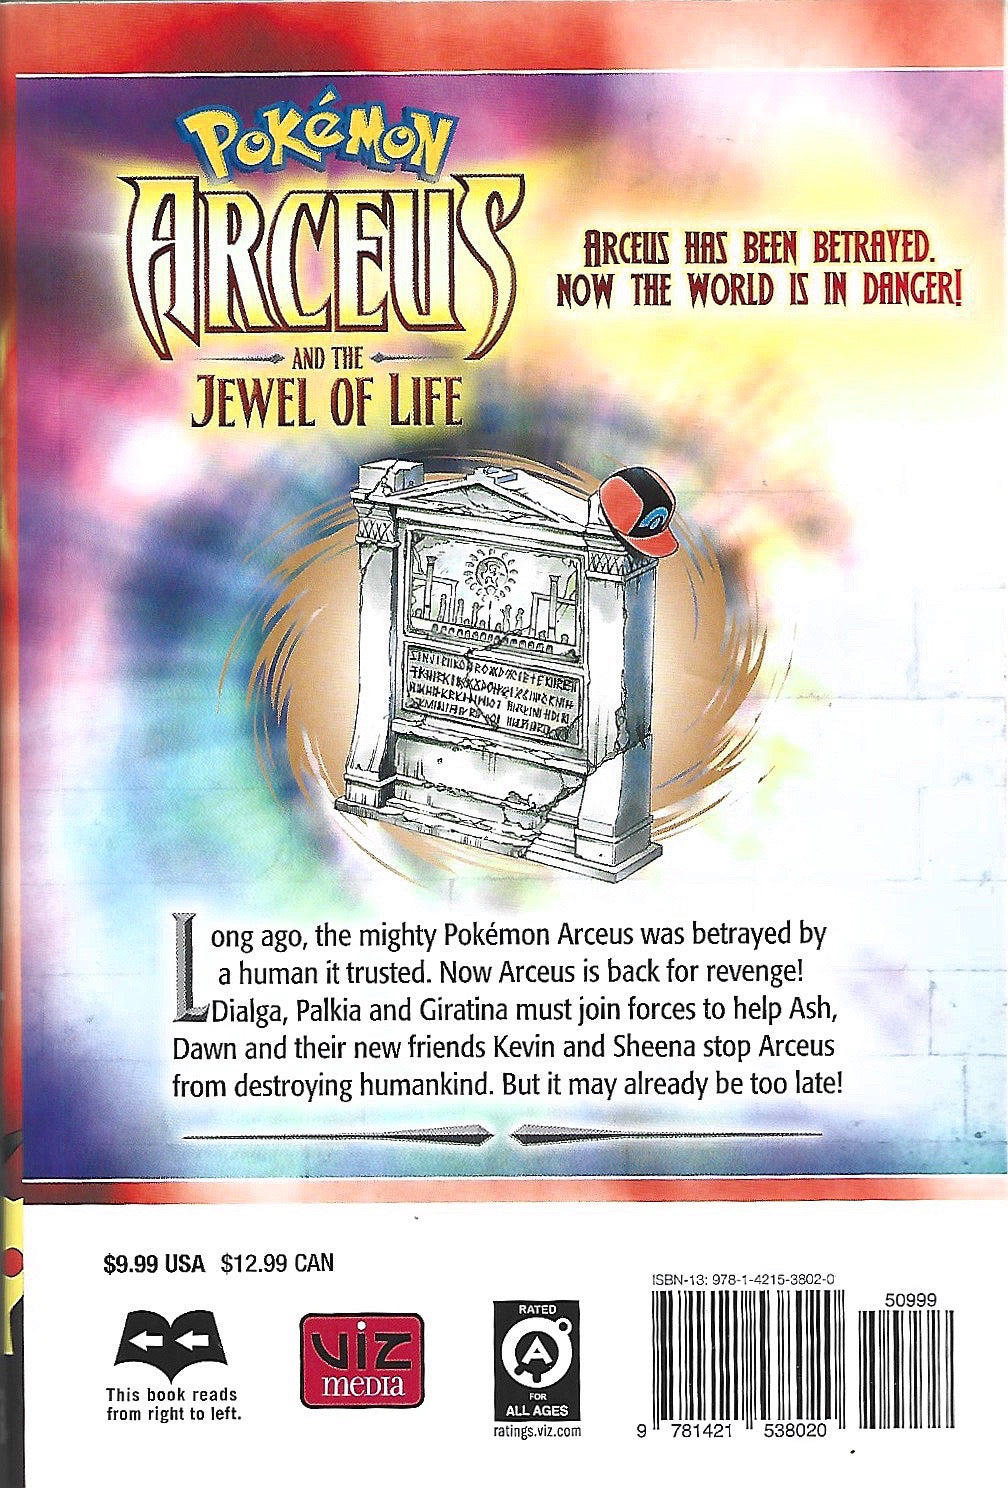 Pokémon: Arceus and the Jewel of Life by Makoto Mizobuchi, Paperback